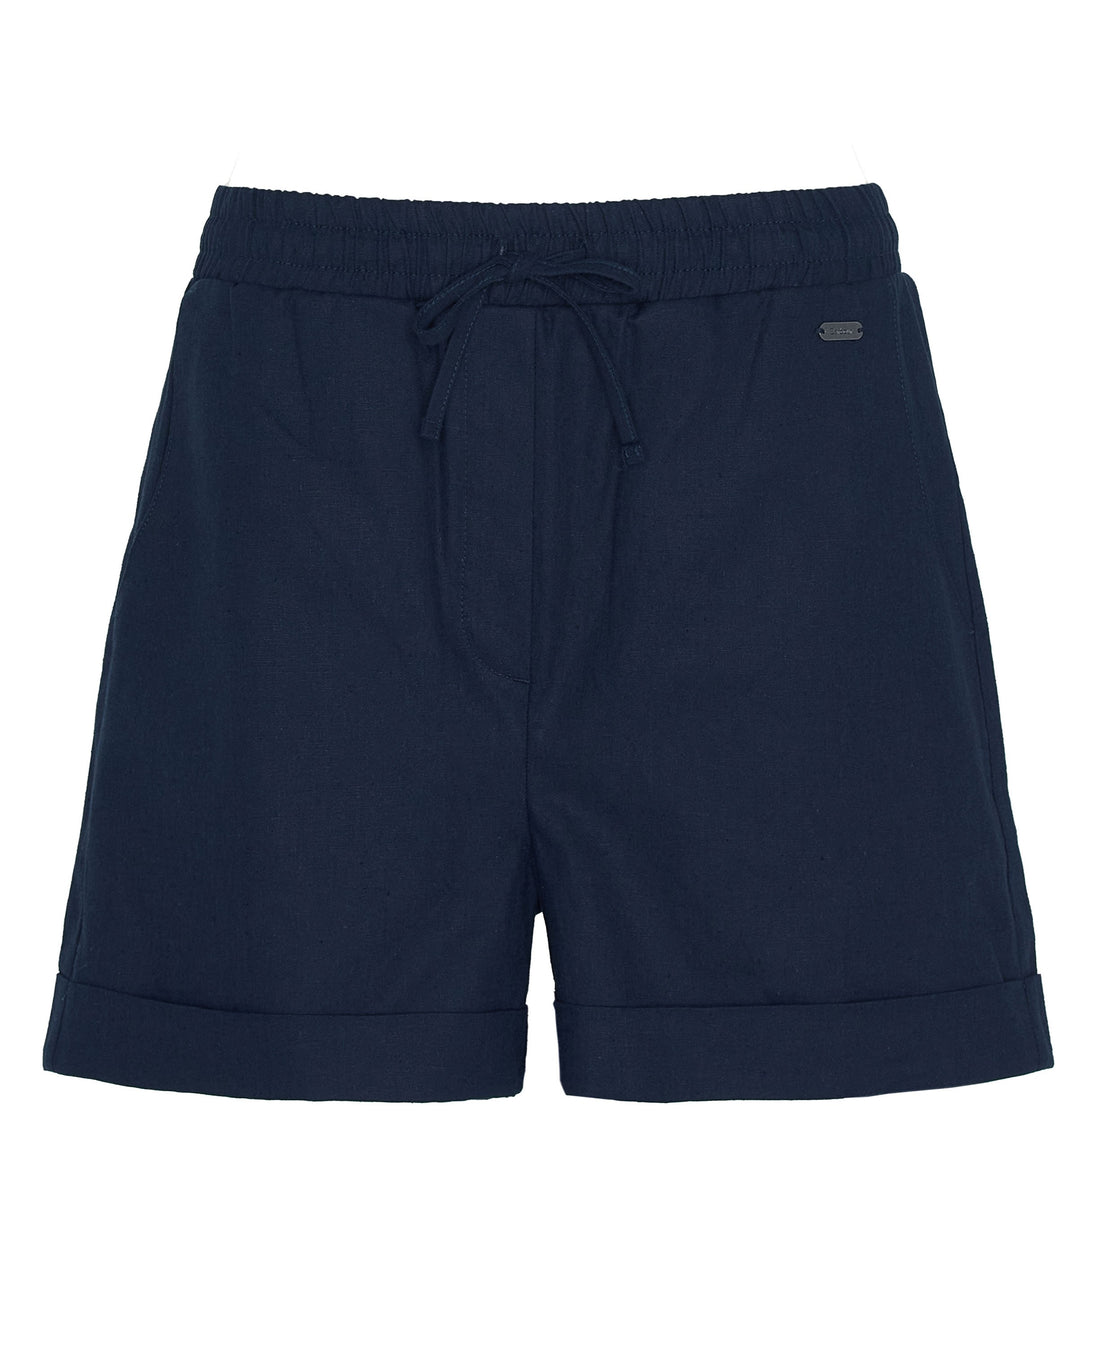 Elsden Shorts - Navy